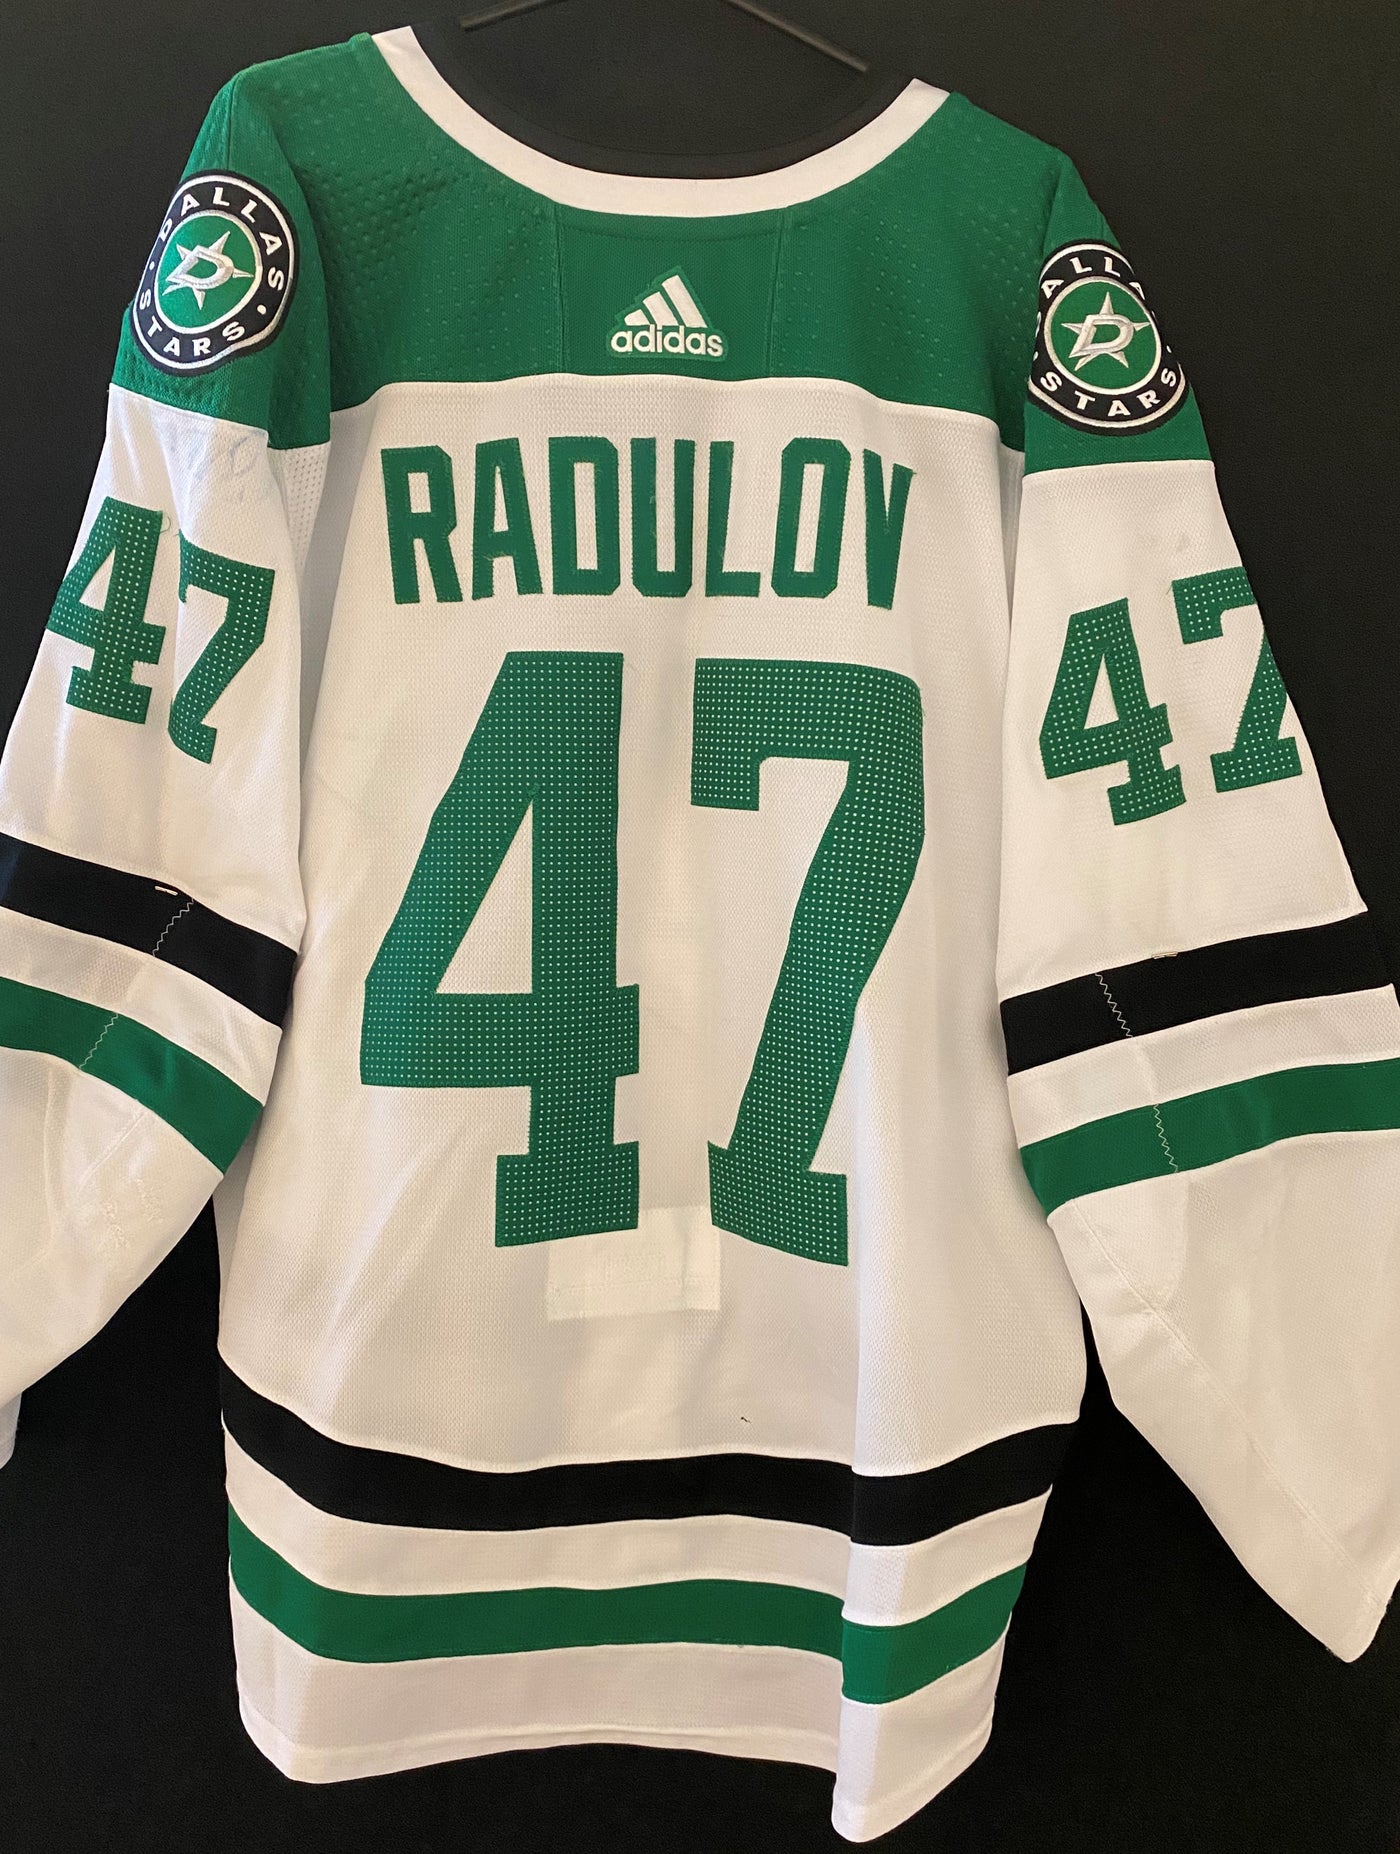 Alexander Radulov 19/20 Game Worn Away Jersey Set 1 in Green and White - Back View